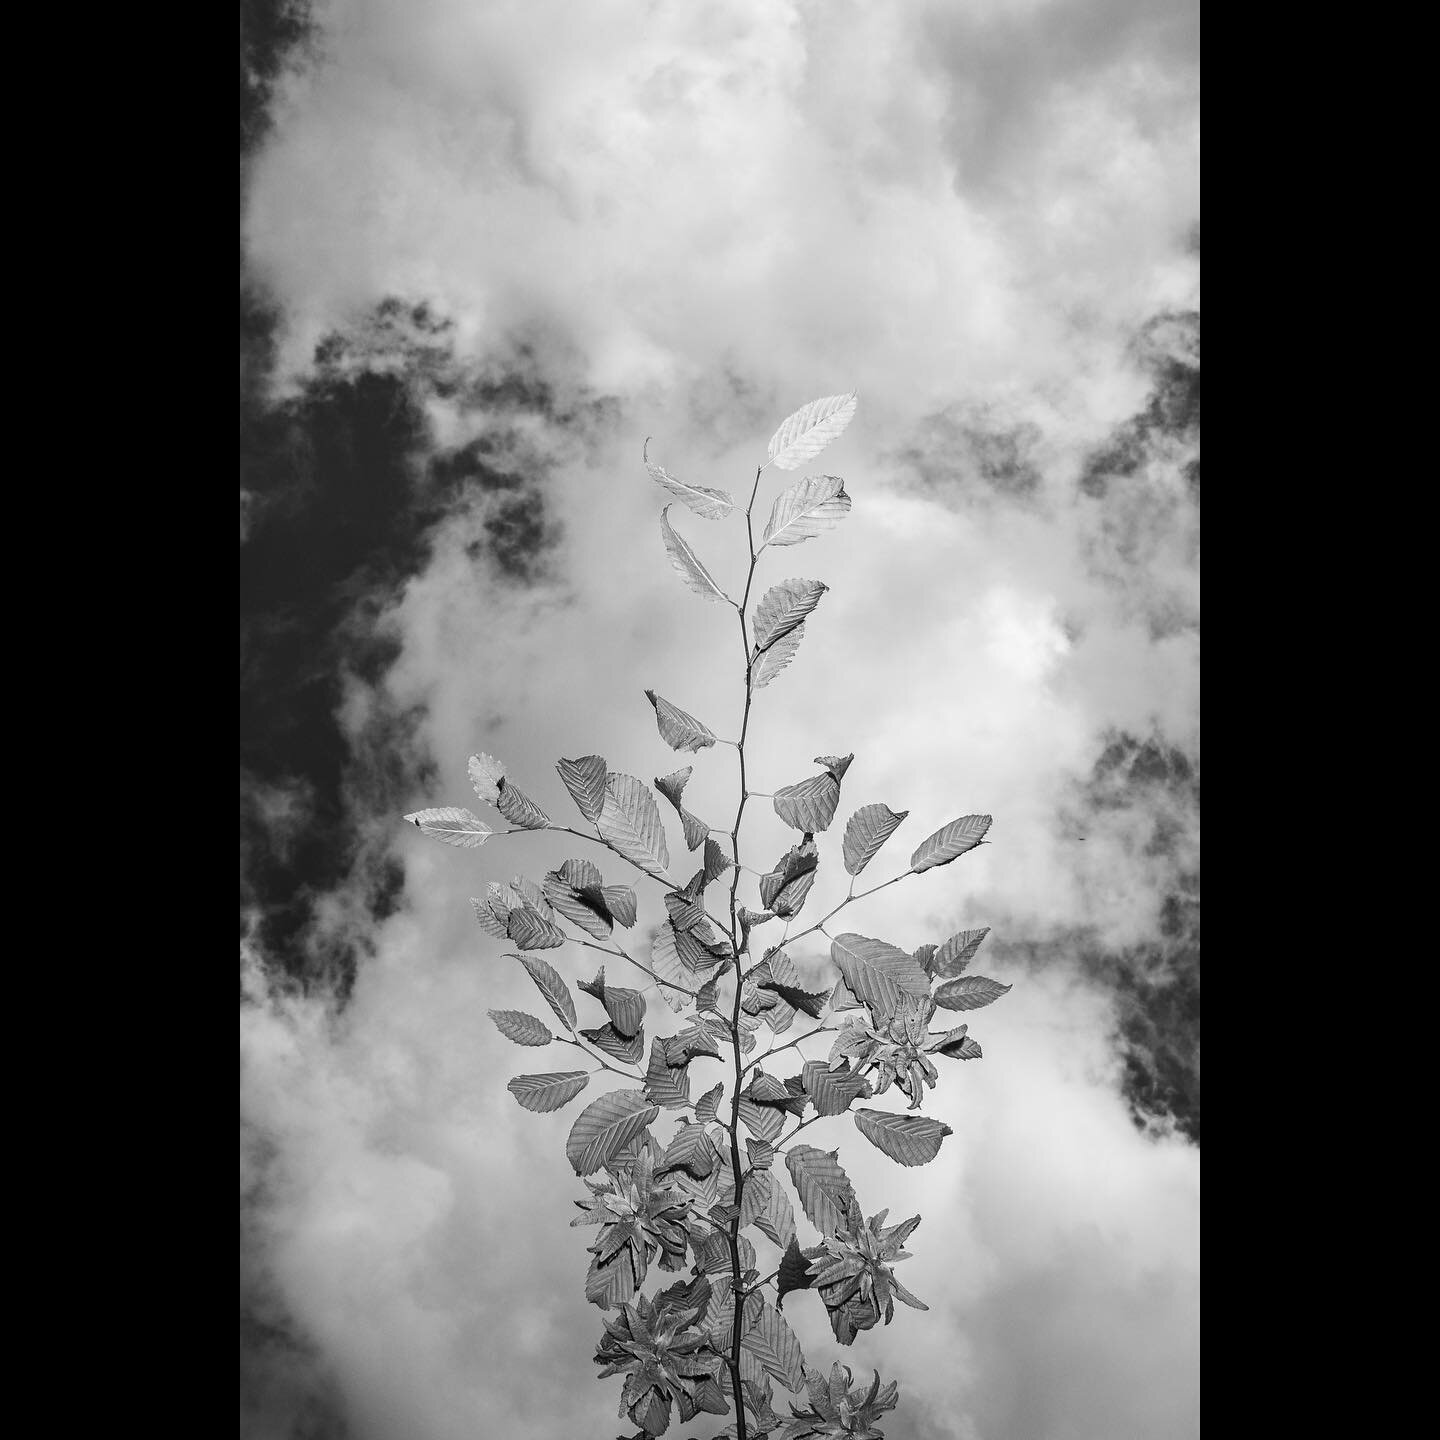 BRANCH AND SKY
&bull;
&bull;
&bull;
#branch #sky #tree #nature #london #urbanadventures #abstract #monochrome #blackandwhite #ricoh #ricohgr3 #grsnaps #flashphotography #lightpixlabs #adventuresinmonochrome #monochroman